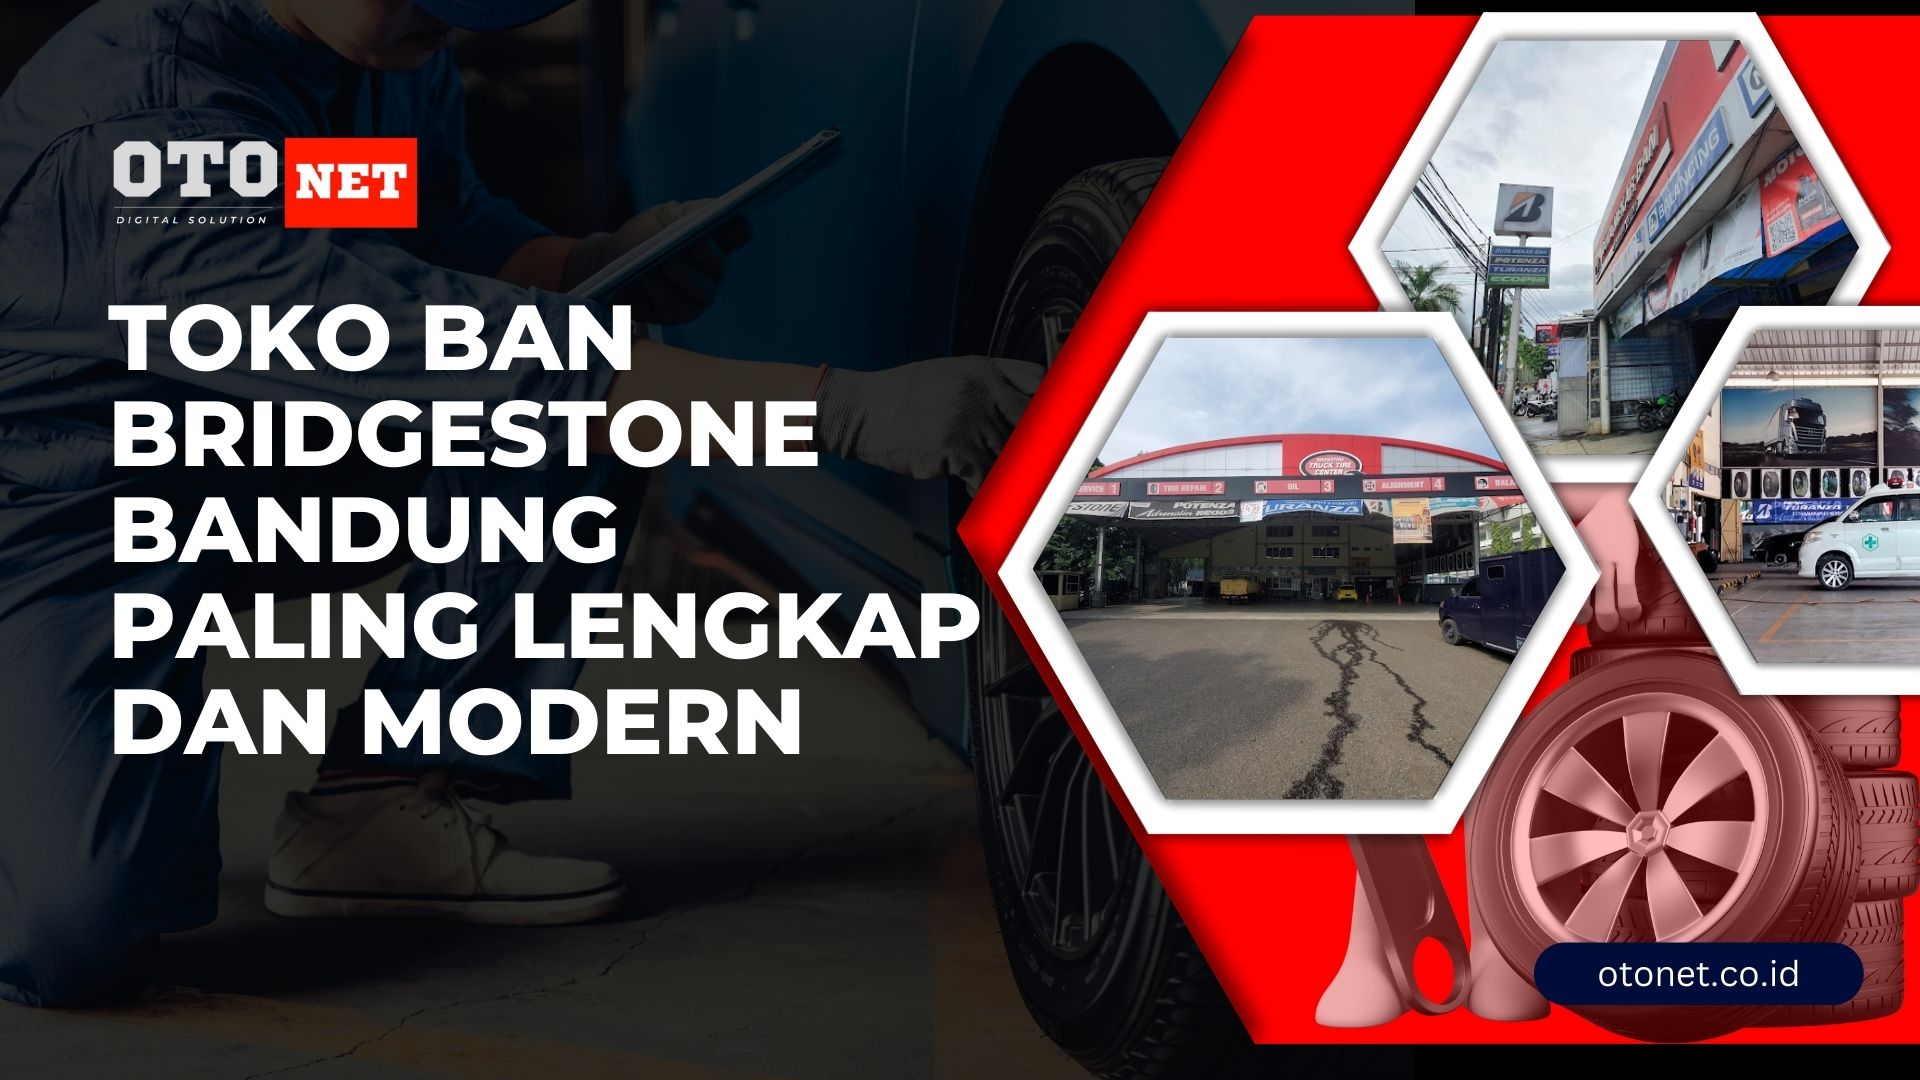 You Are Currently Viewing 20 Toko Ban Bridgestone Bandung Paling Lengkap Dan Modern